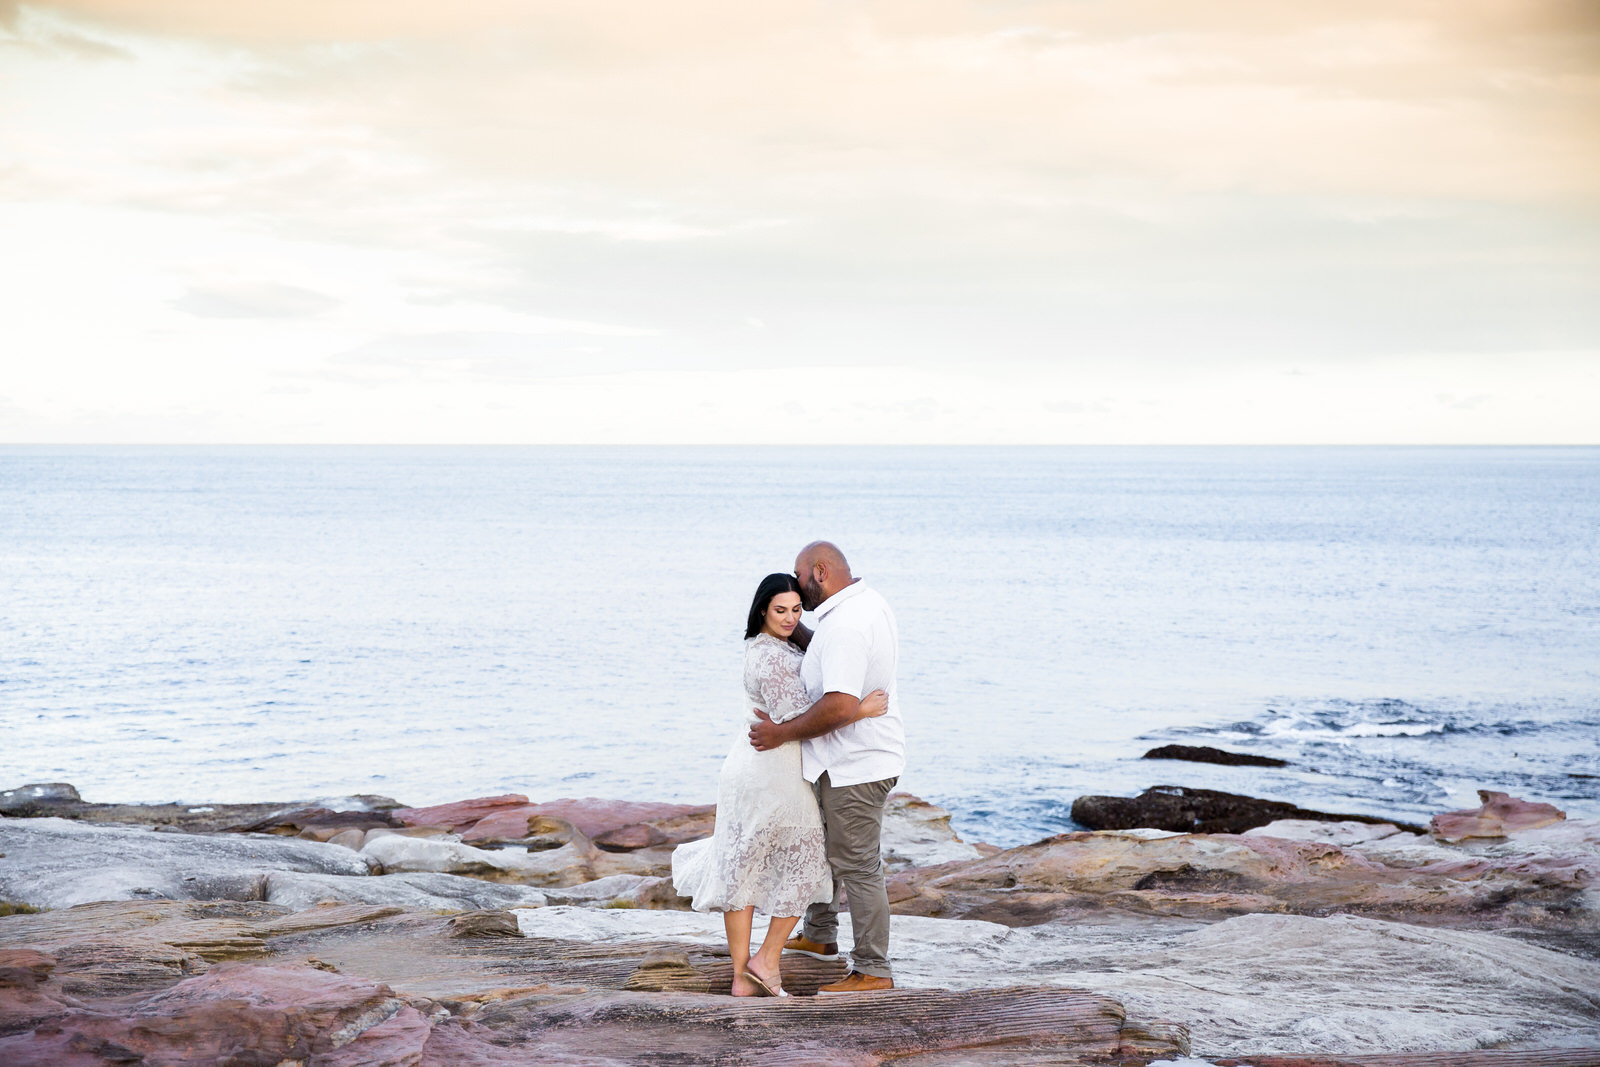 Sydney Wedding Photographer - Maroubra Beach - Jennifer Lam Photography (22).jpg